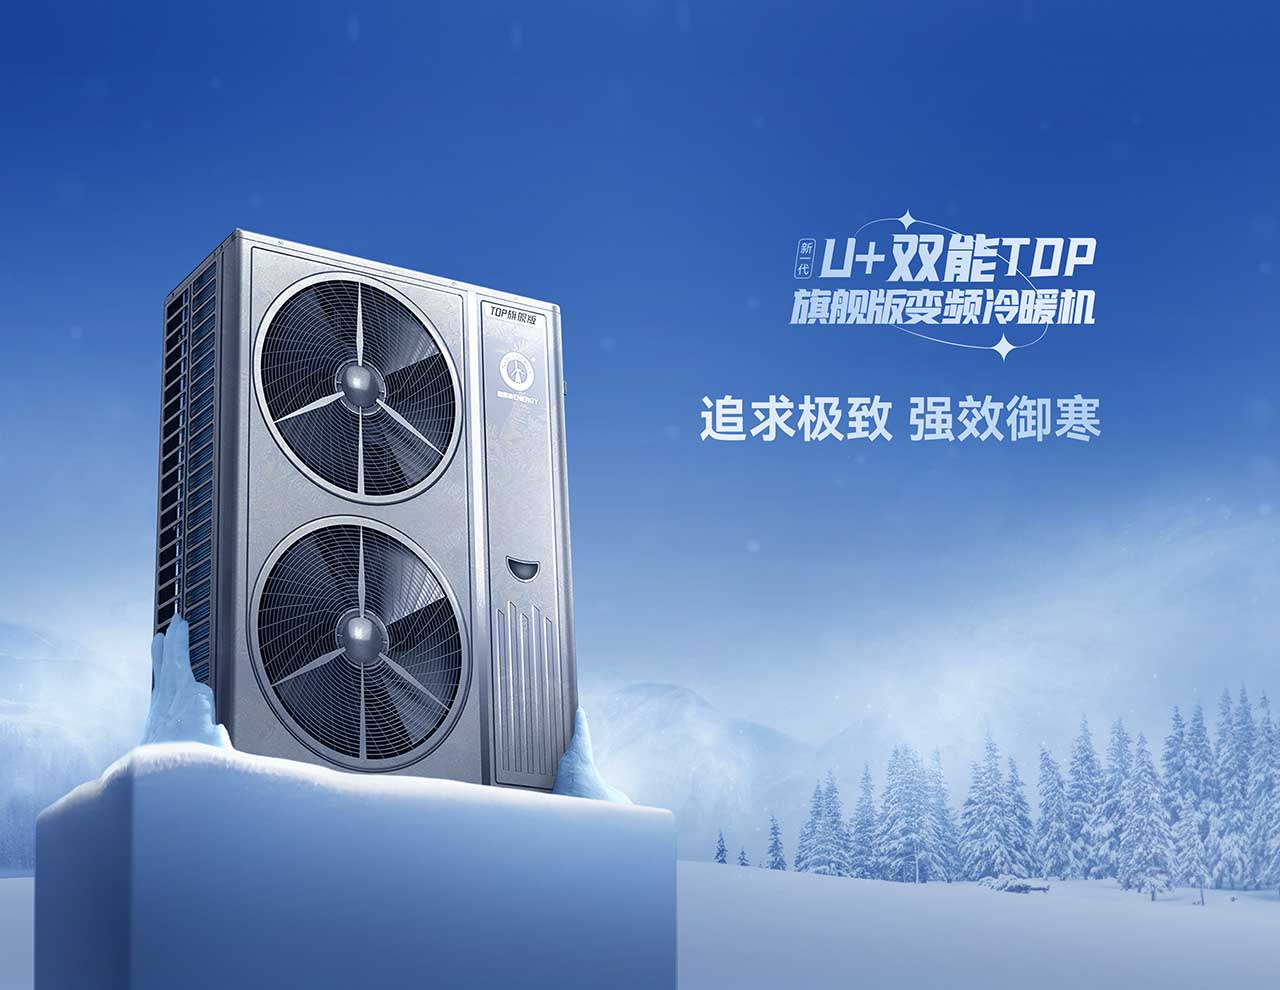 U+双能TOP变频冷暖机极享静音，无噪音空气能！